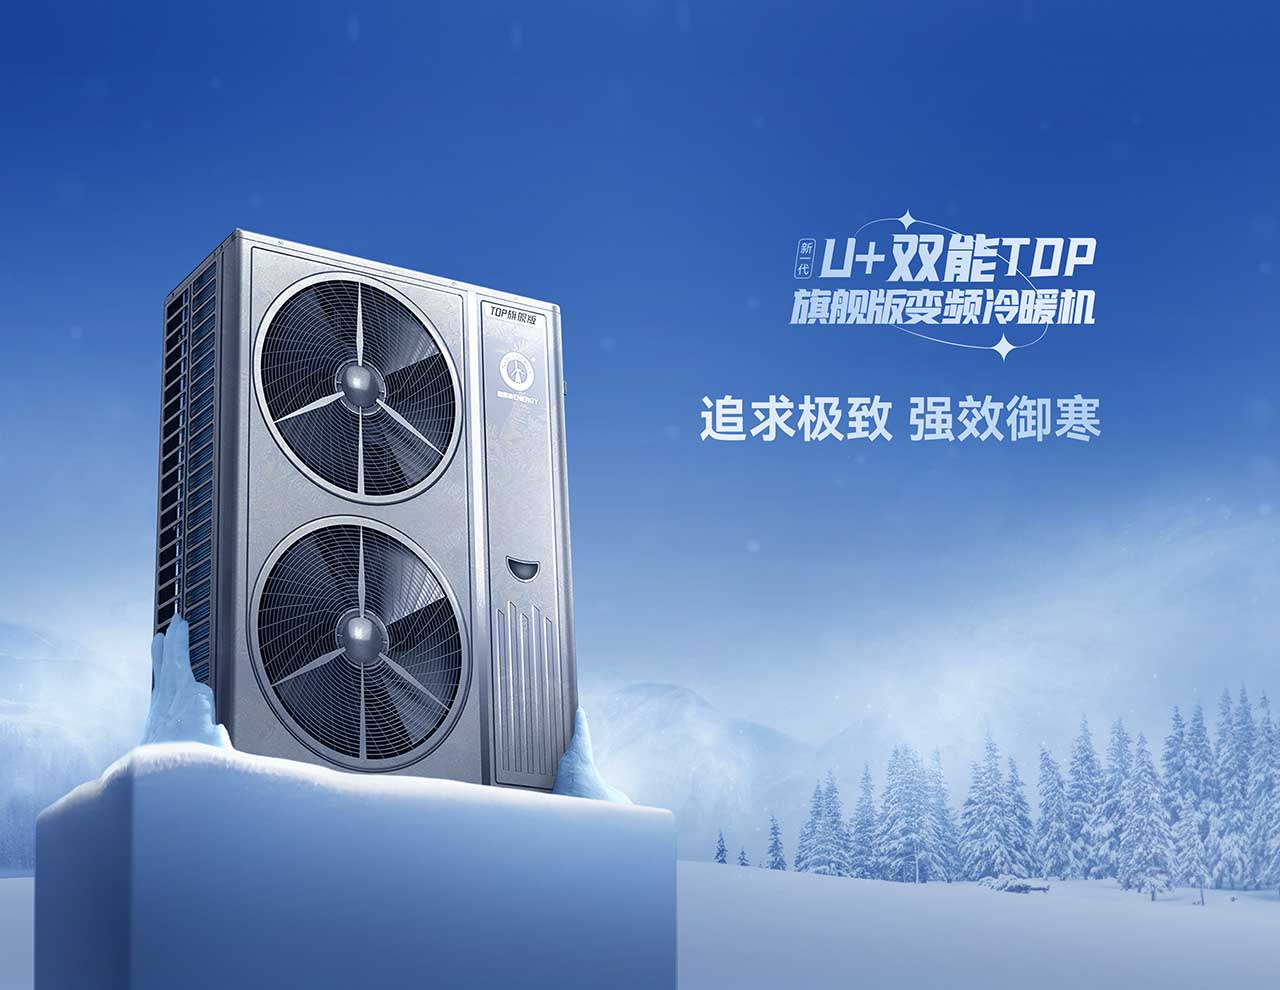 U+双能TOP变频冷暖机极享静音，无噪音空气能！